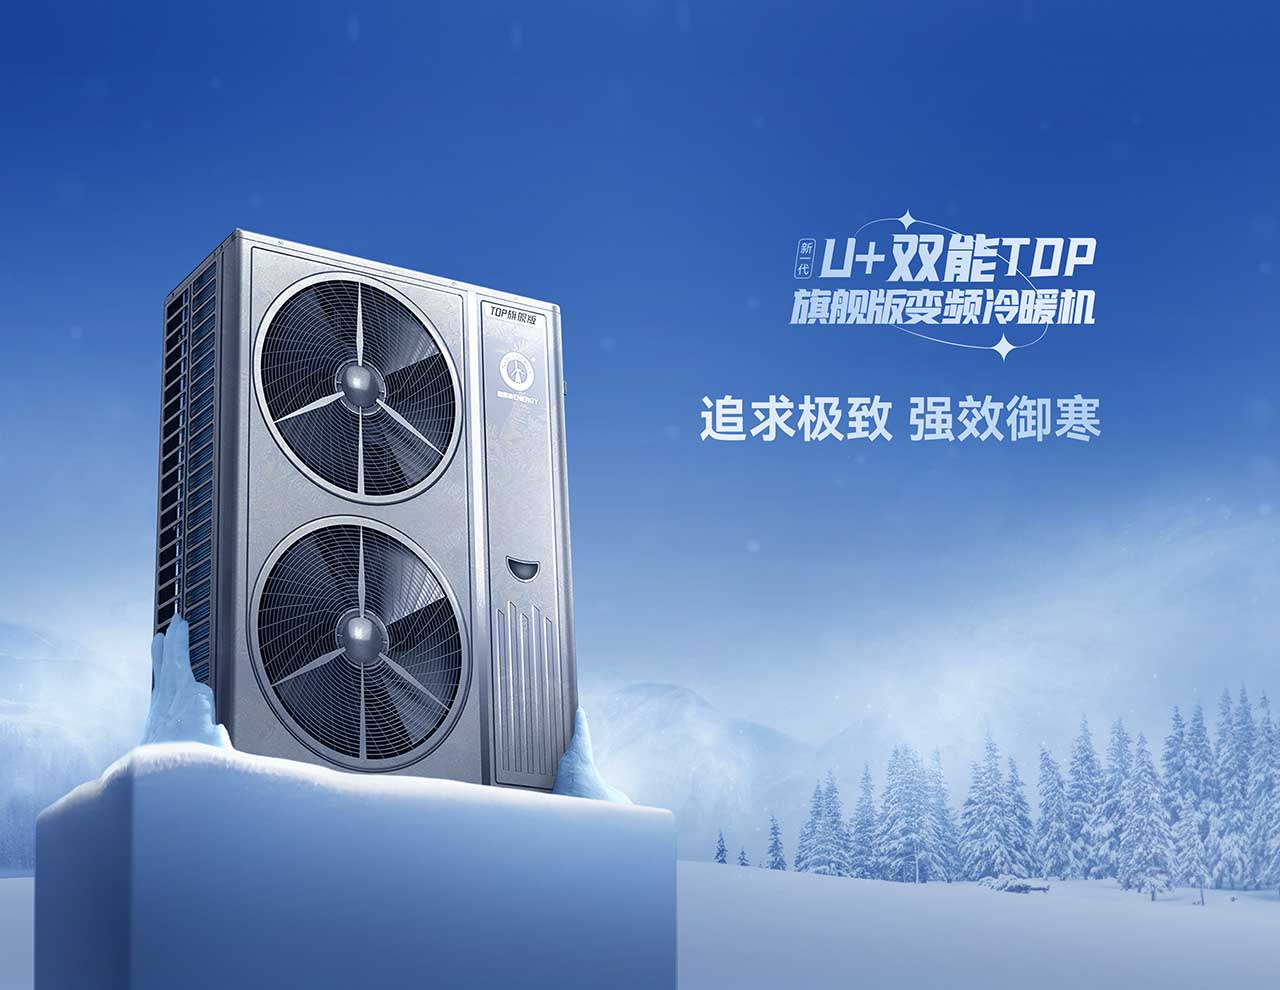 U+双能TOP变频冷暖机极享静音，无噪音空气能！